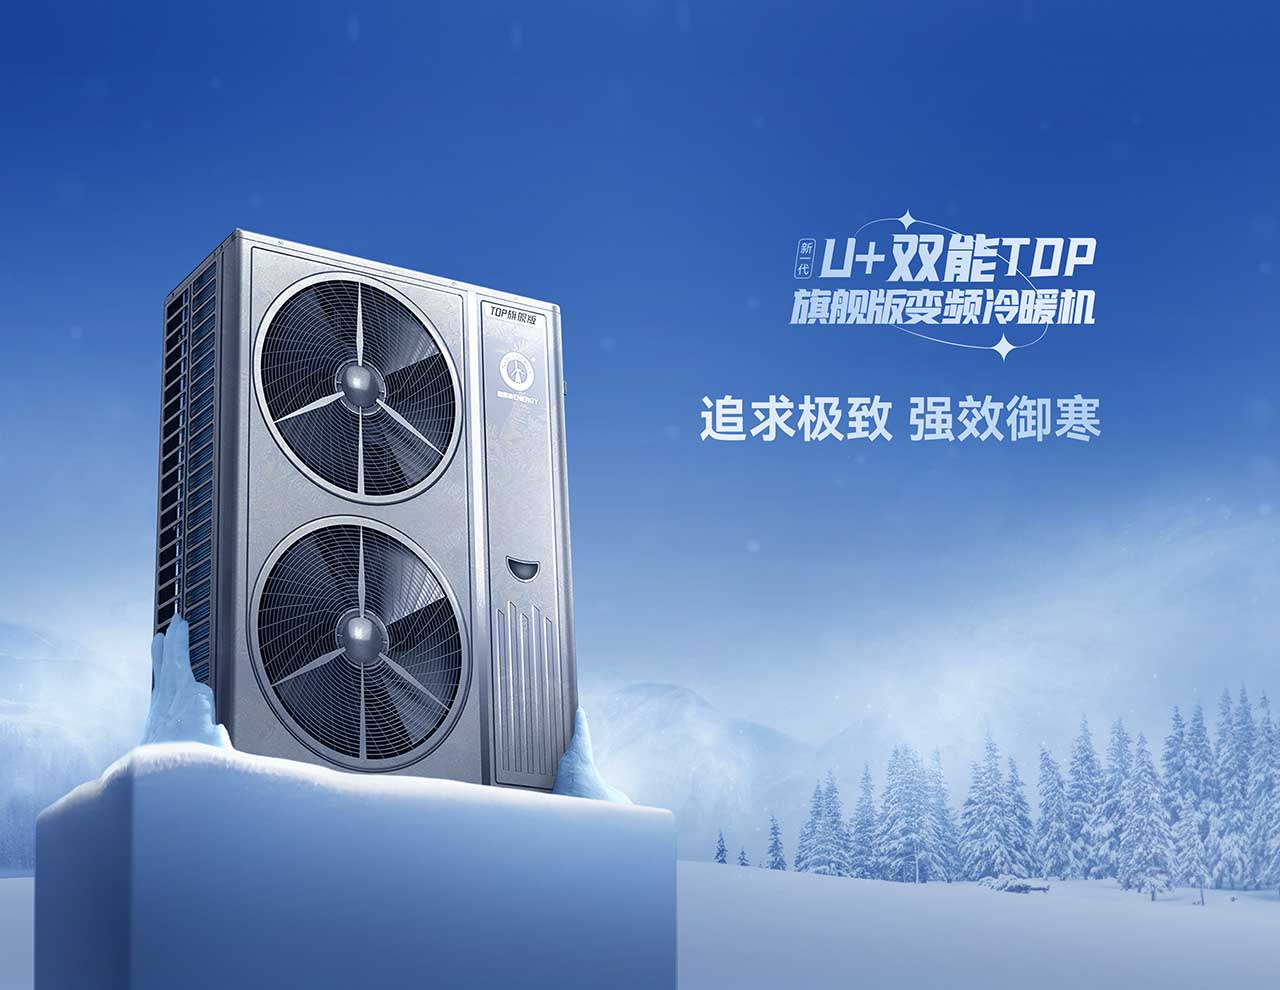 U+双能TOP变频冷暖机极享静音，无噪音空气能！